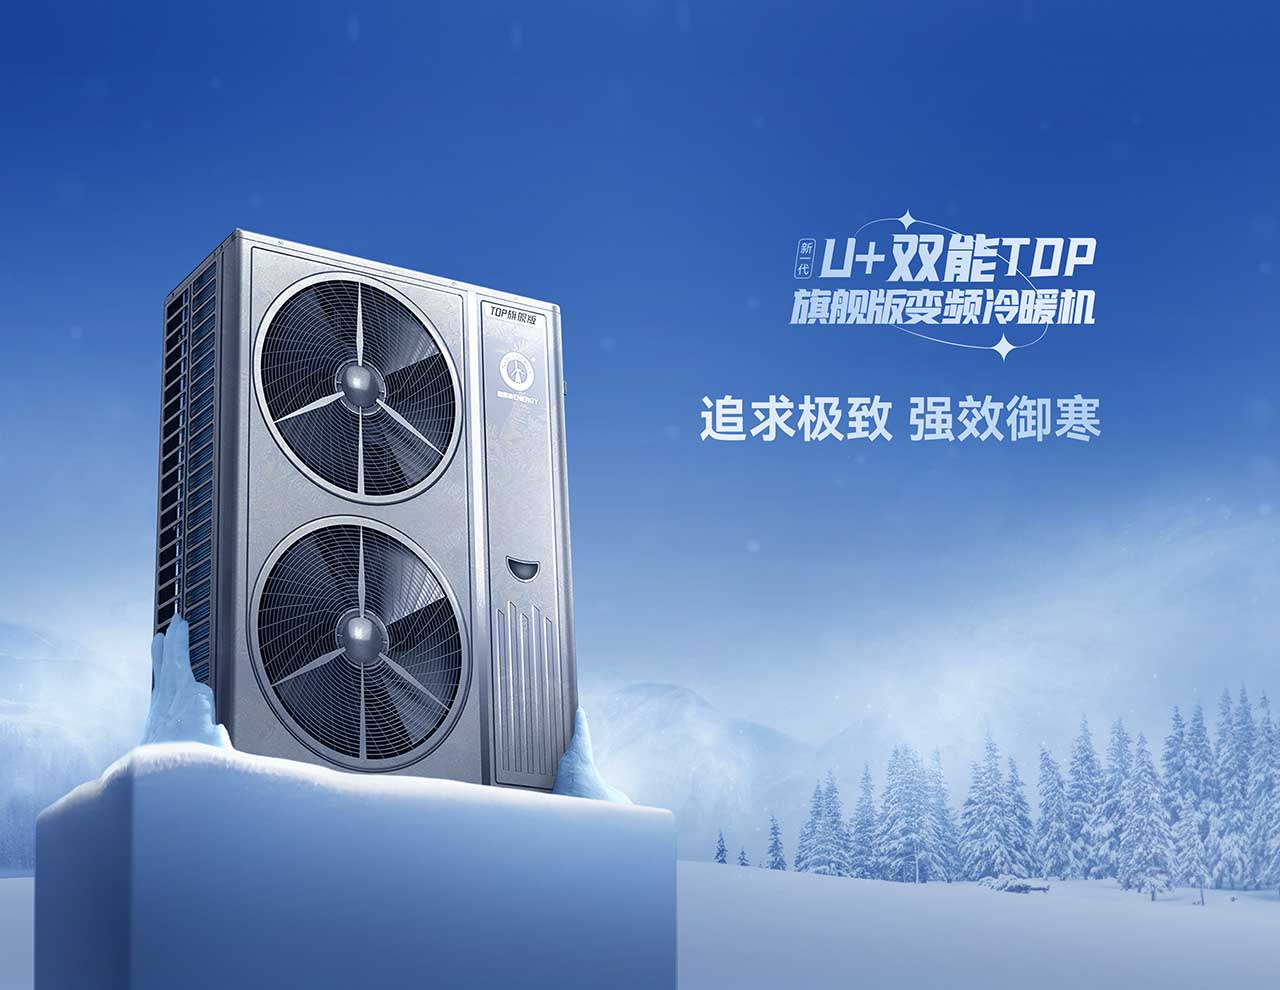 U+双能TOP变频冷暖机极享静音，无噪音空气能！